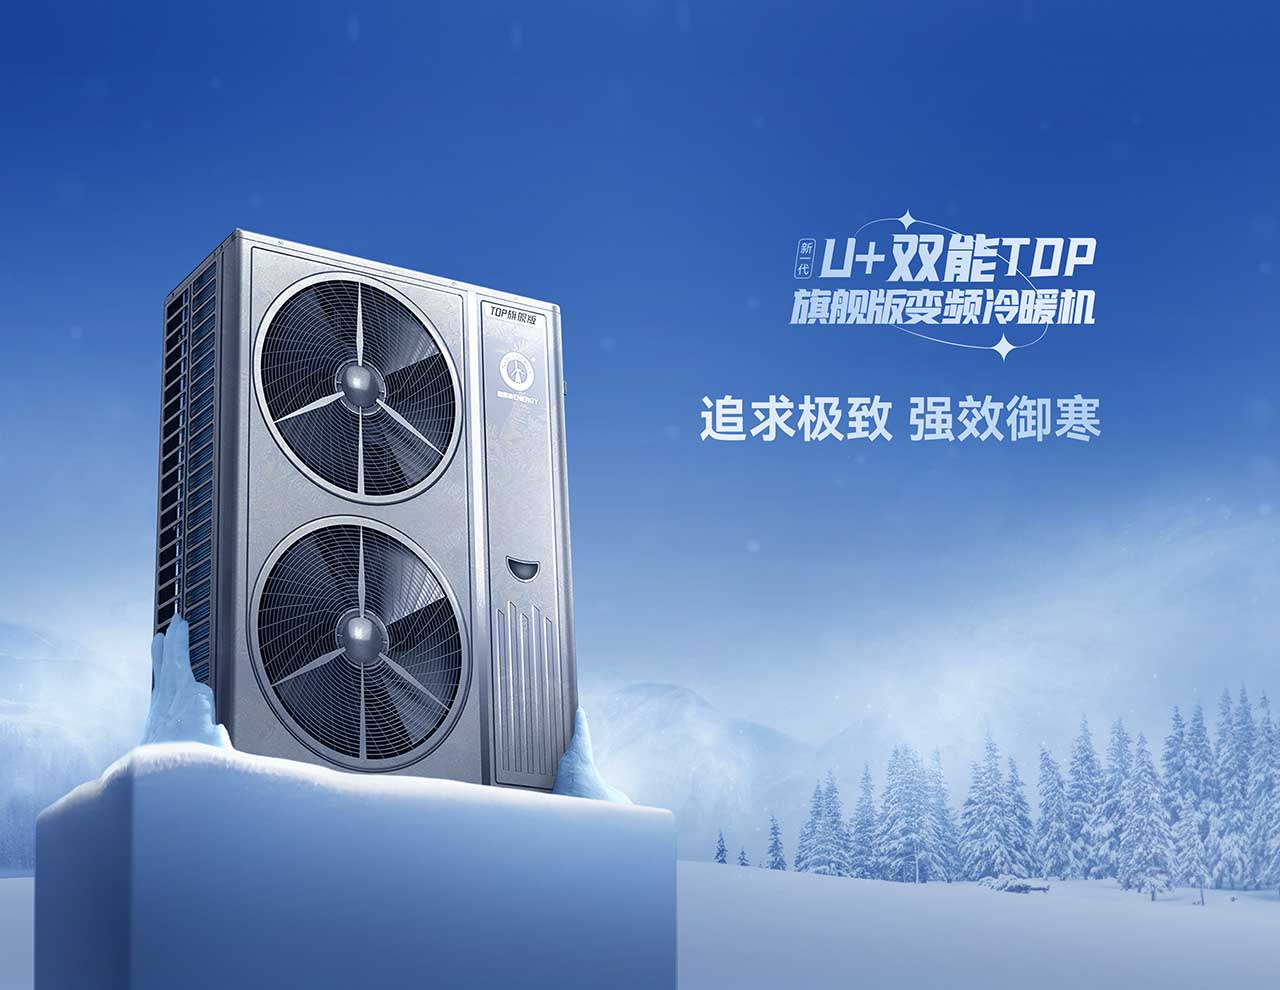 U+双能TOP变频冷暖机极享静音，无噪音空气能！